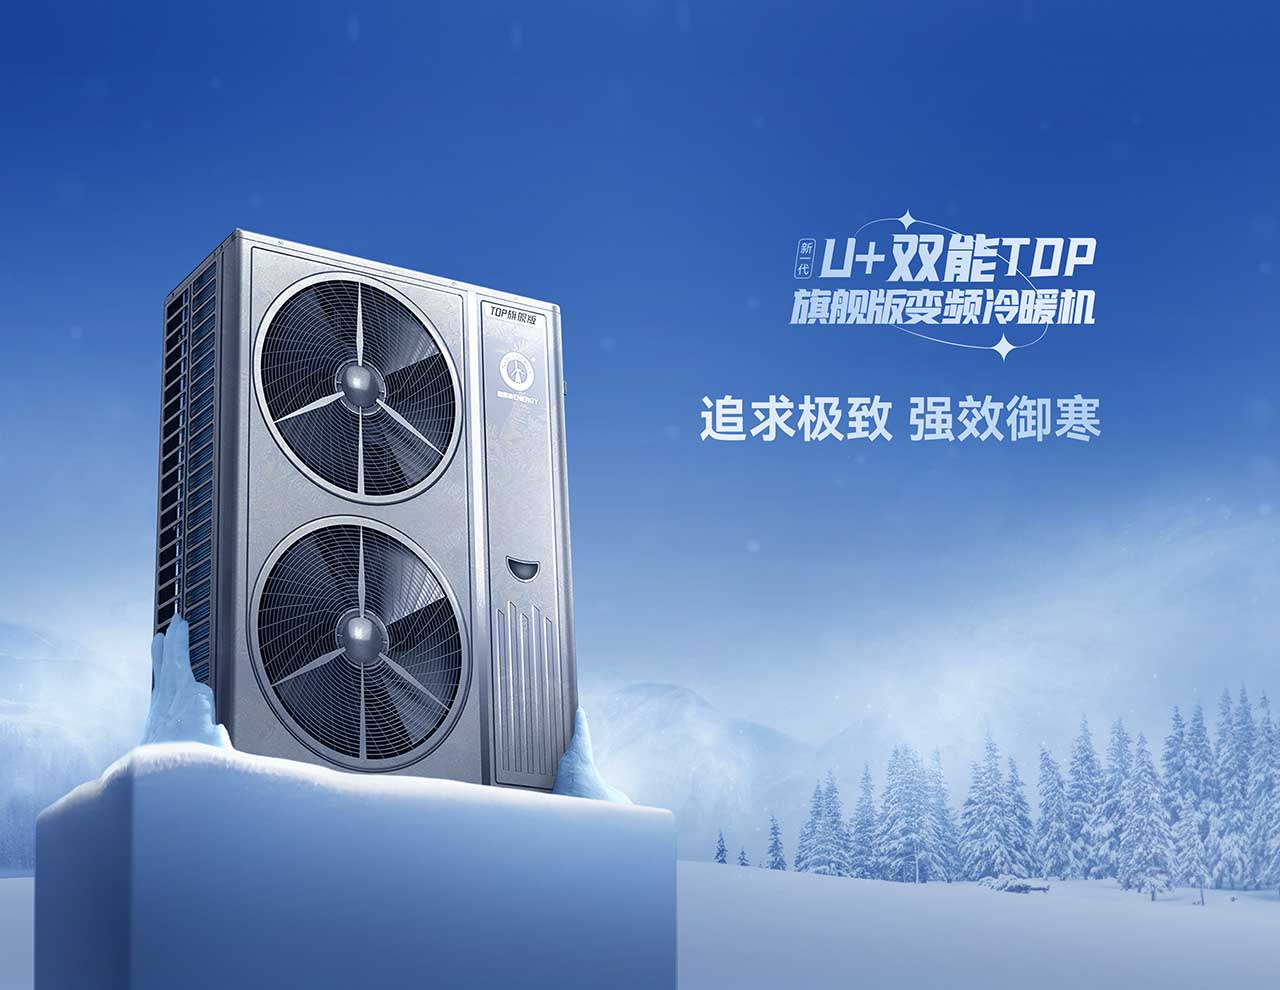 U+双能TOP变频冷暖机极享静音，无噪音空气能！